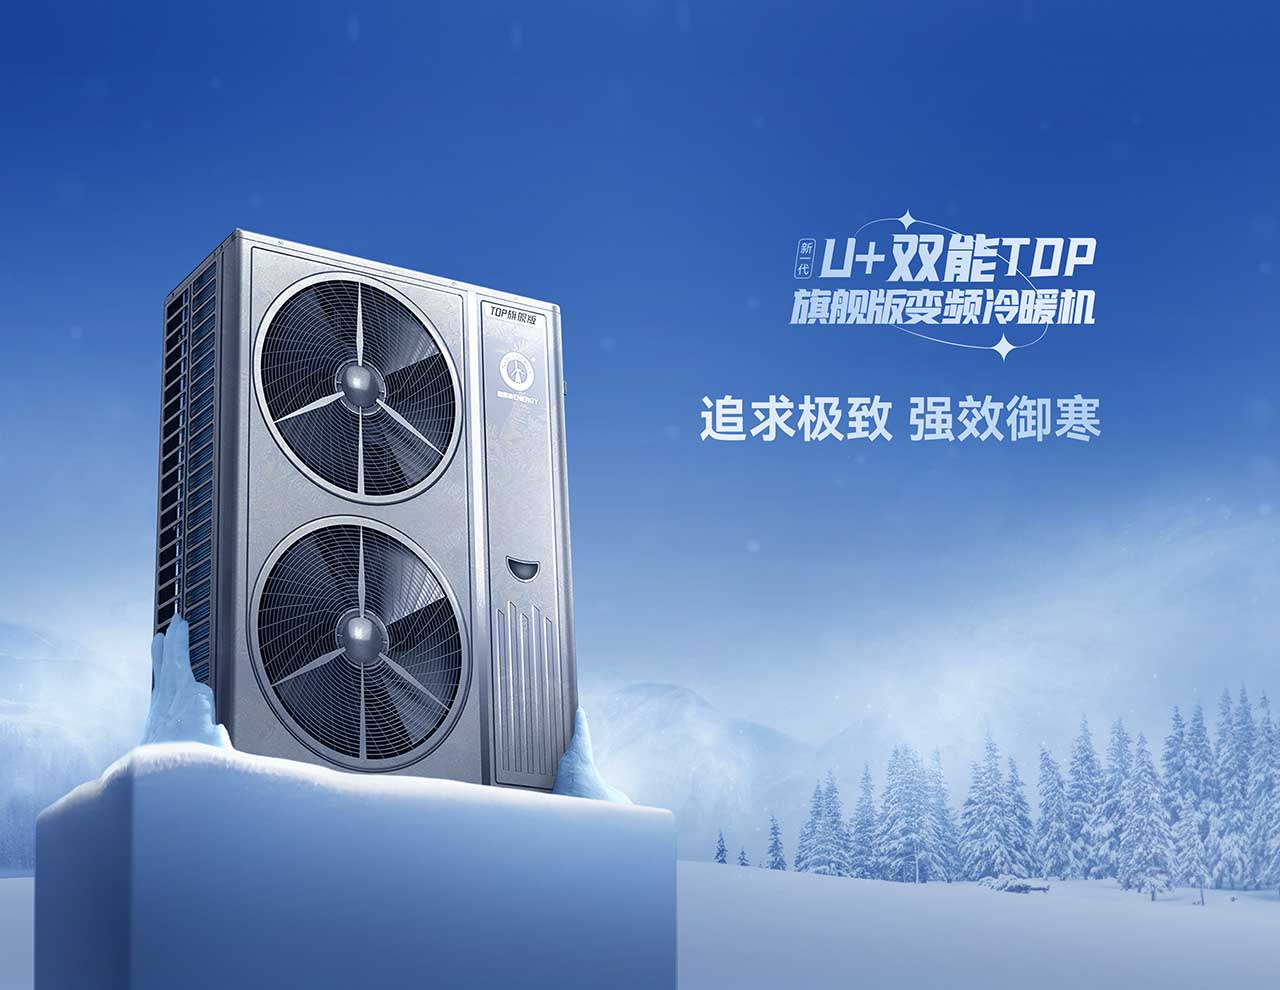 U+双能TOP变频冷暖机极享静音，无噪音空气能！